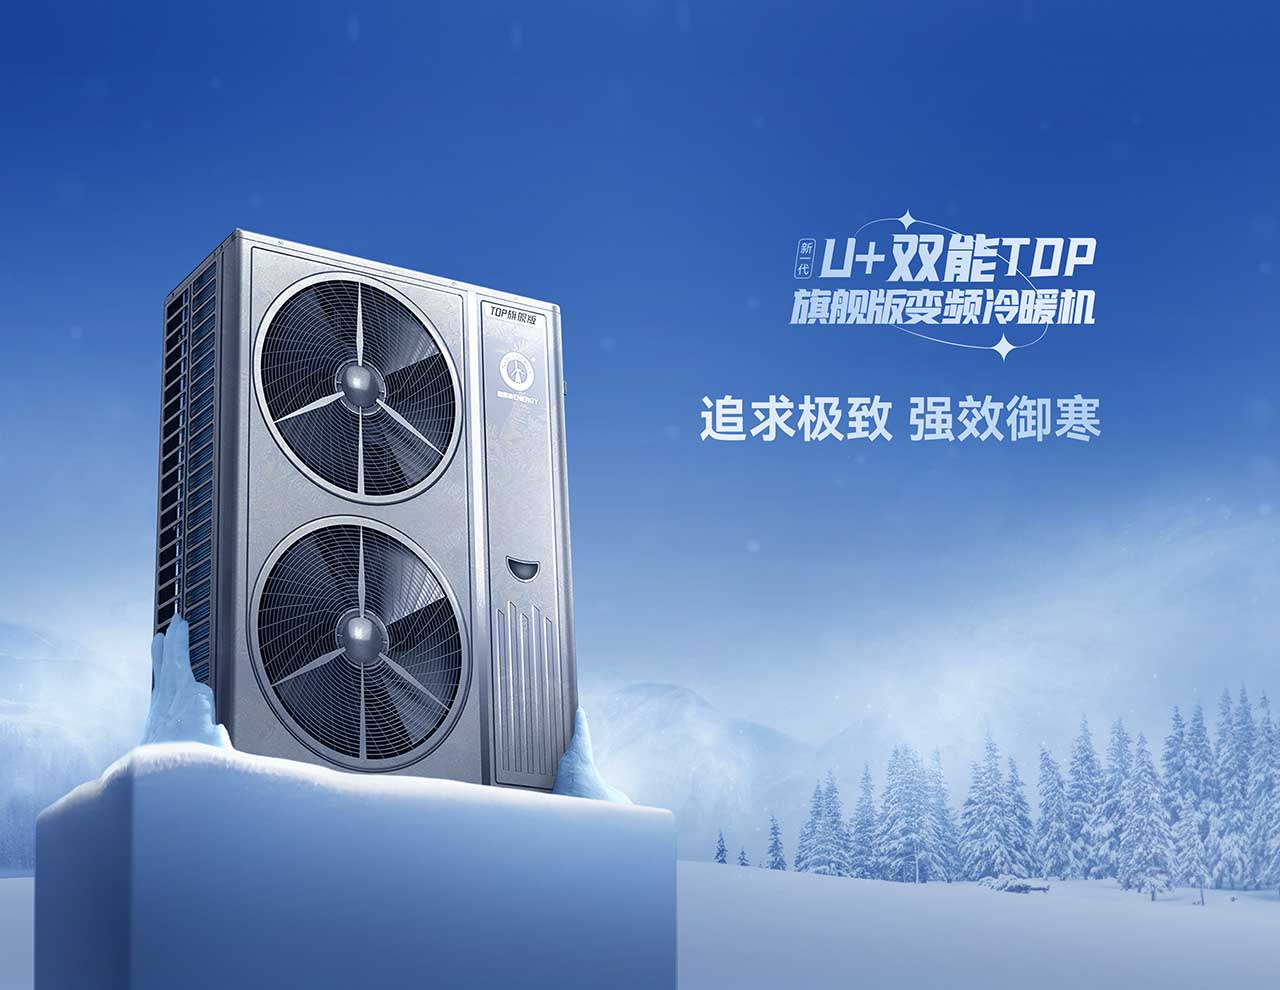 U+双能TOP变频冷暖机极享静音，无噪音空气能！